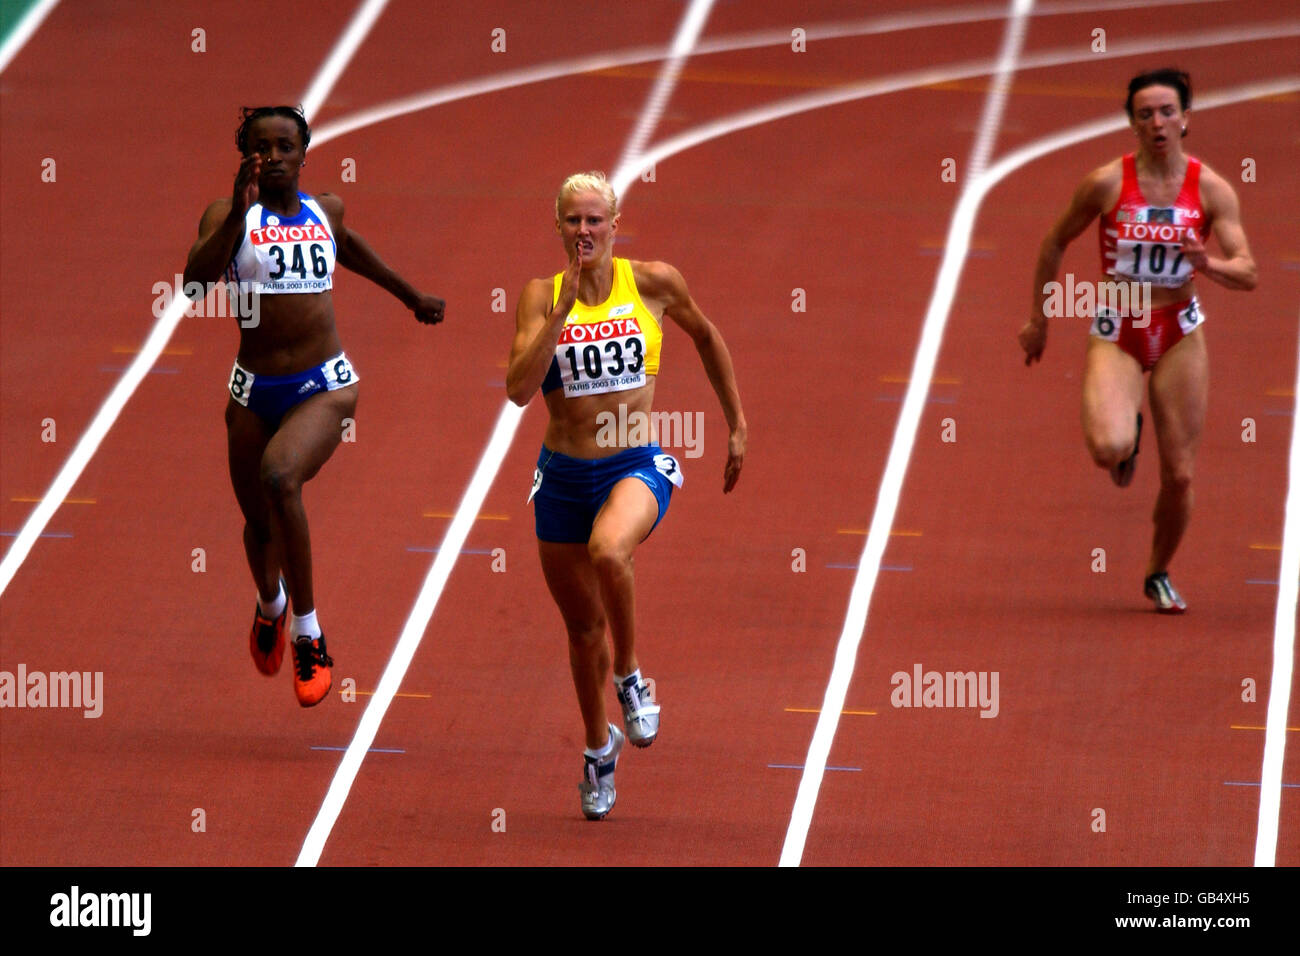 Athletics - IAAF World Athletics Championships - Paris 2003 - Women's Heptathlon Stock Photo